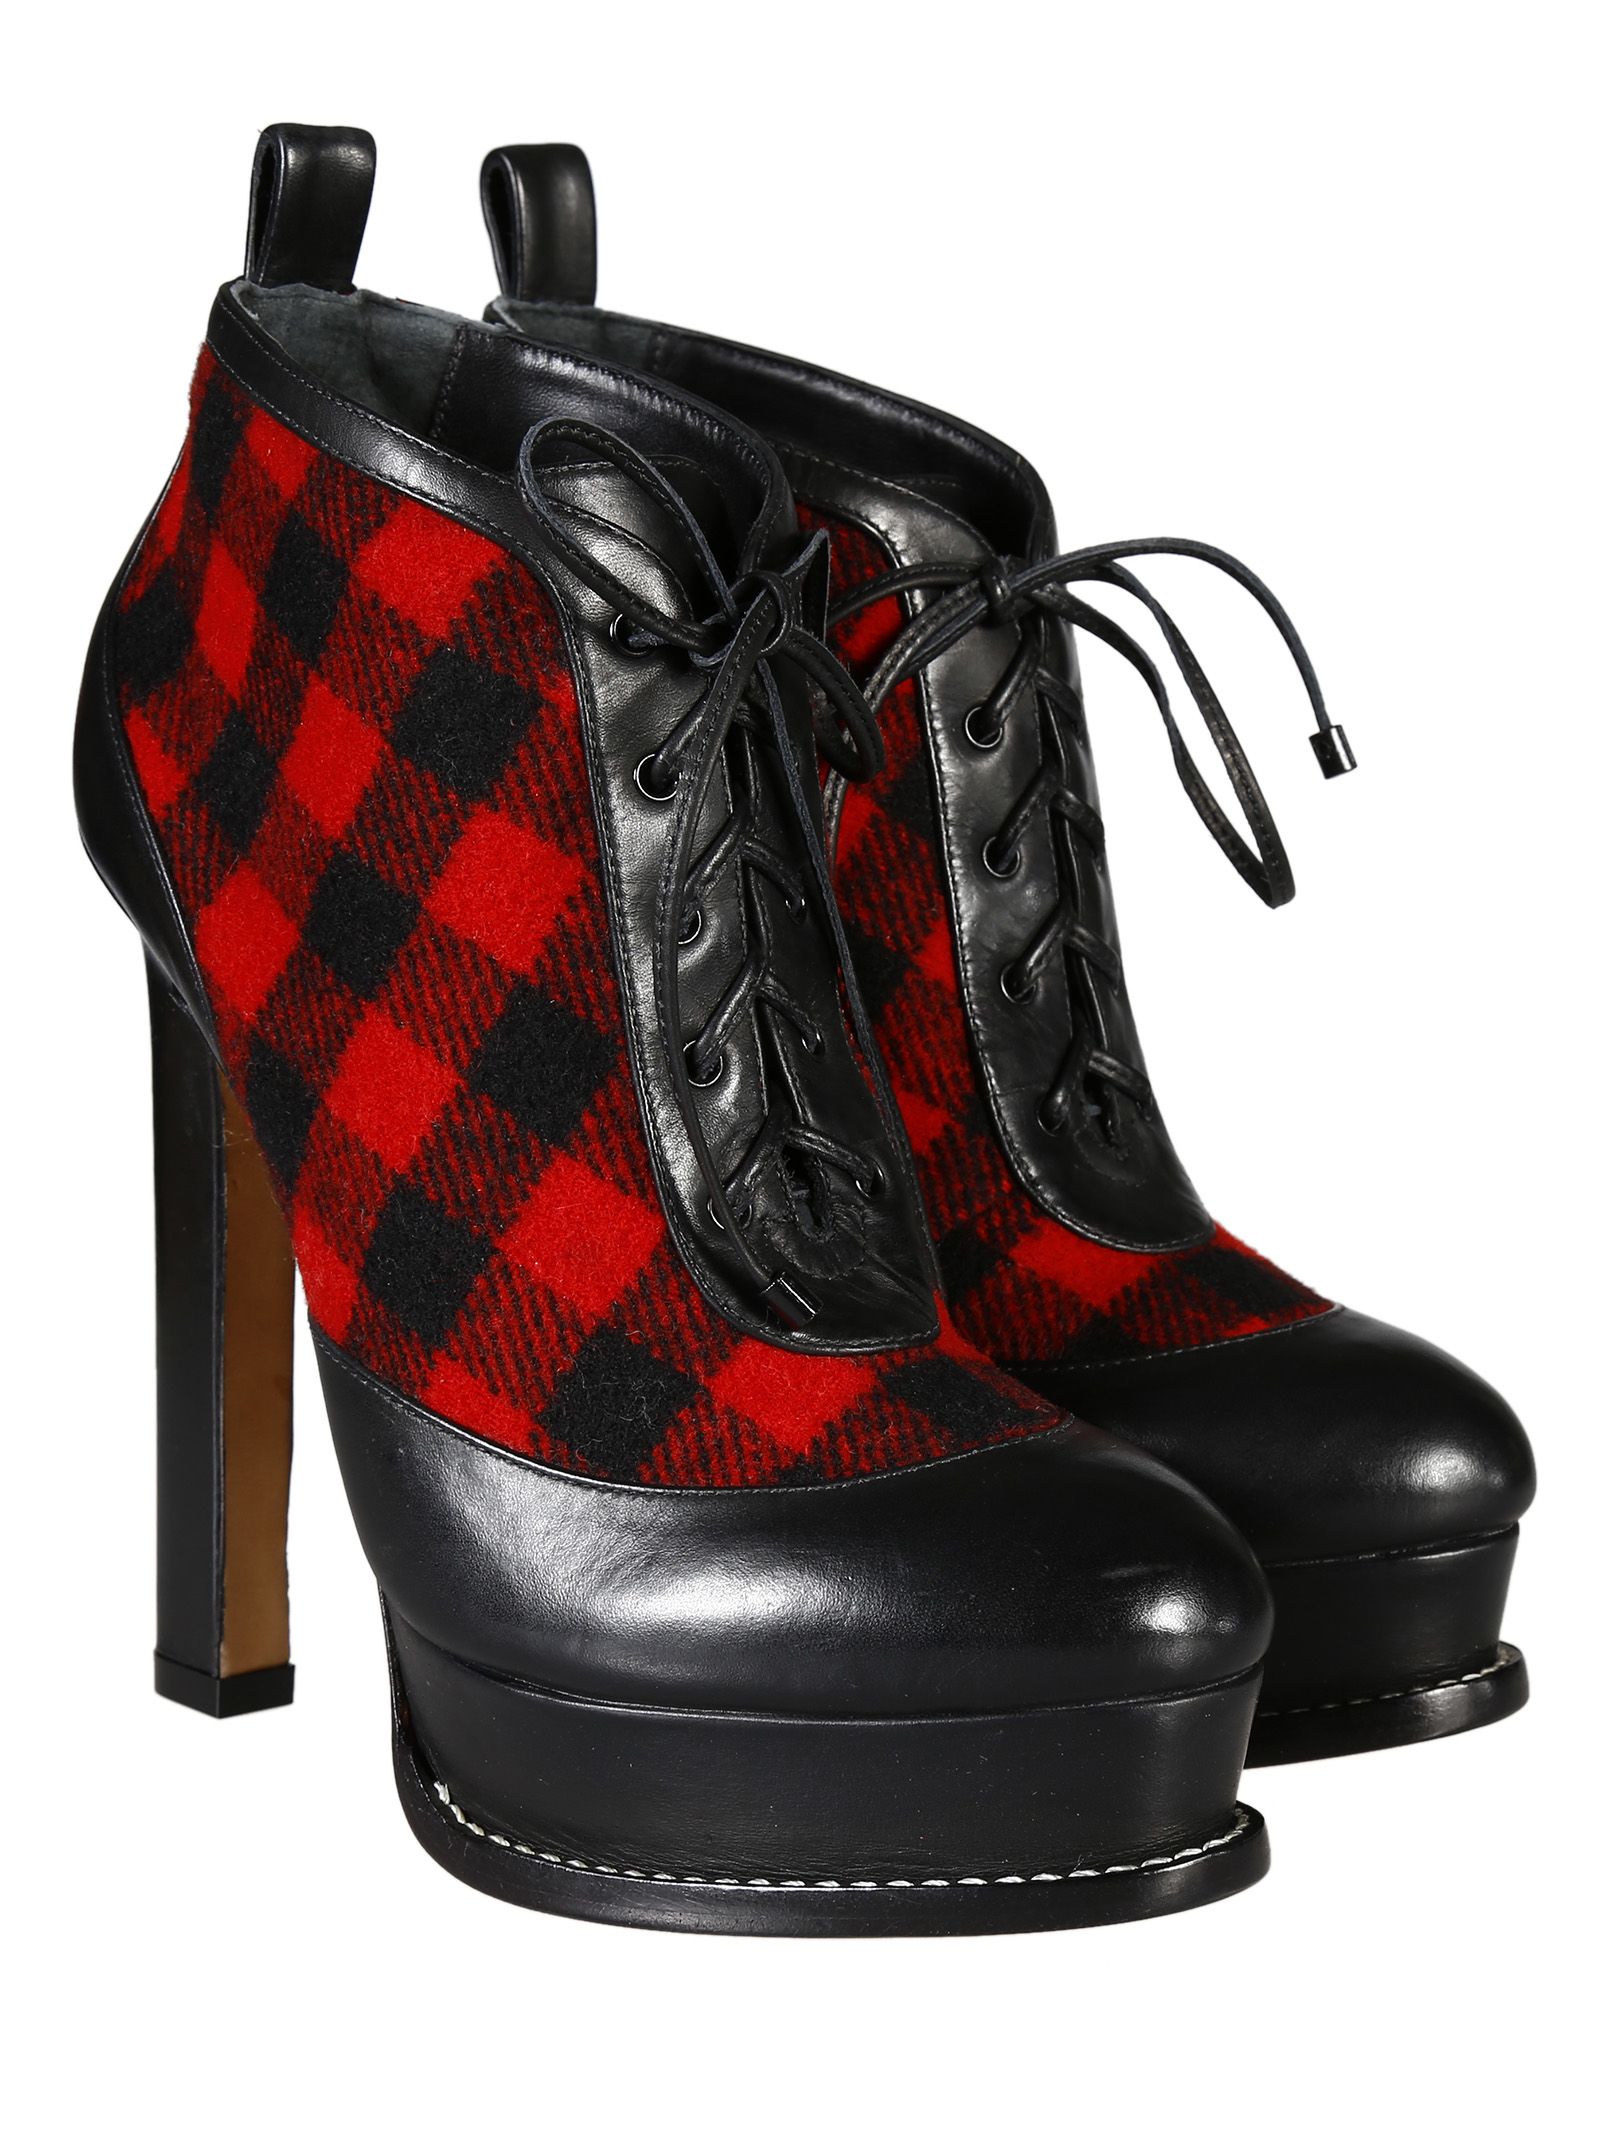 Sophia Webster - Sophia Webster Katy Check Boots - Black/Red, Women's ...